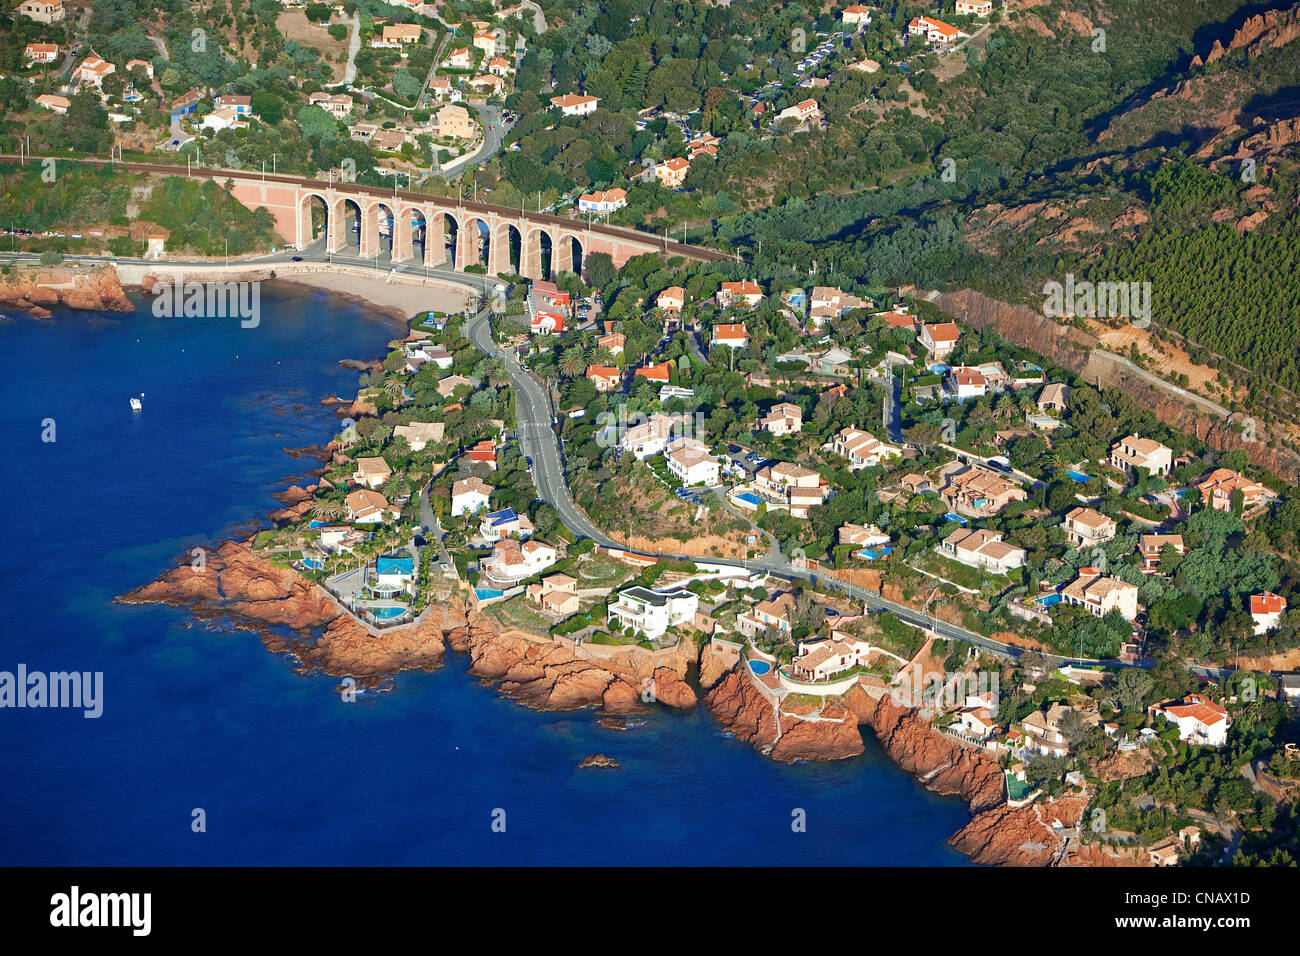 France, Var, Esterel, Saint Raphael, antheor, creek antheor (aerial view) Stock Photo